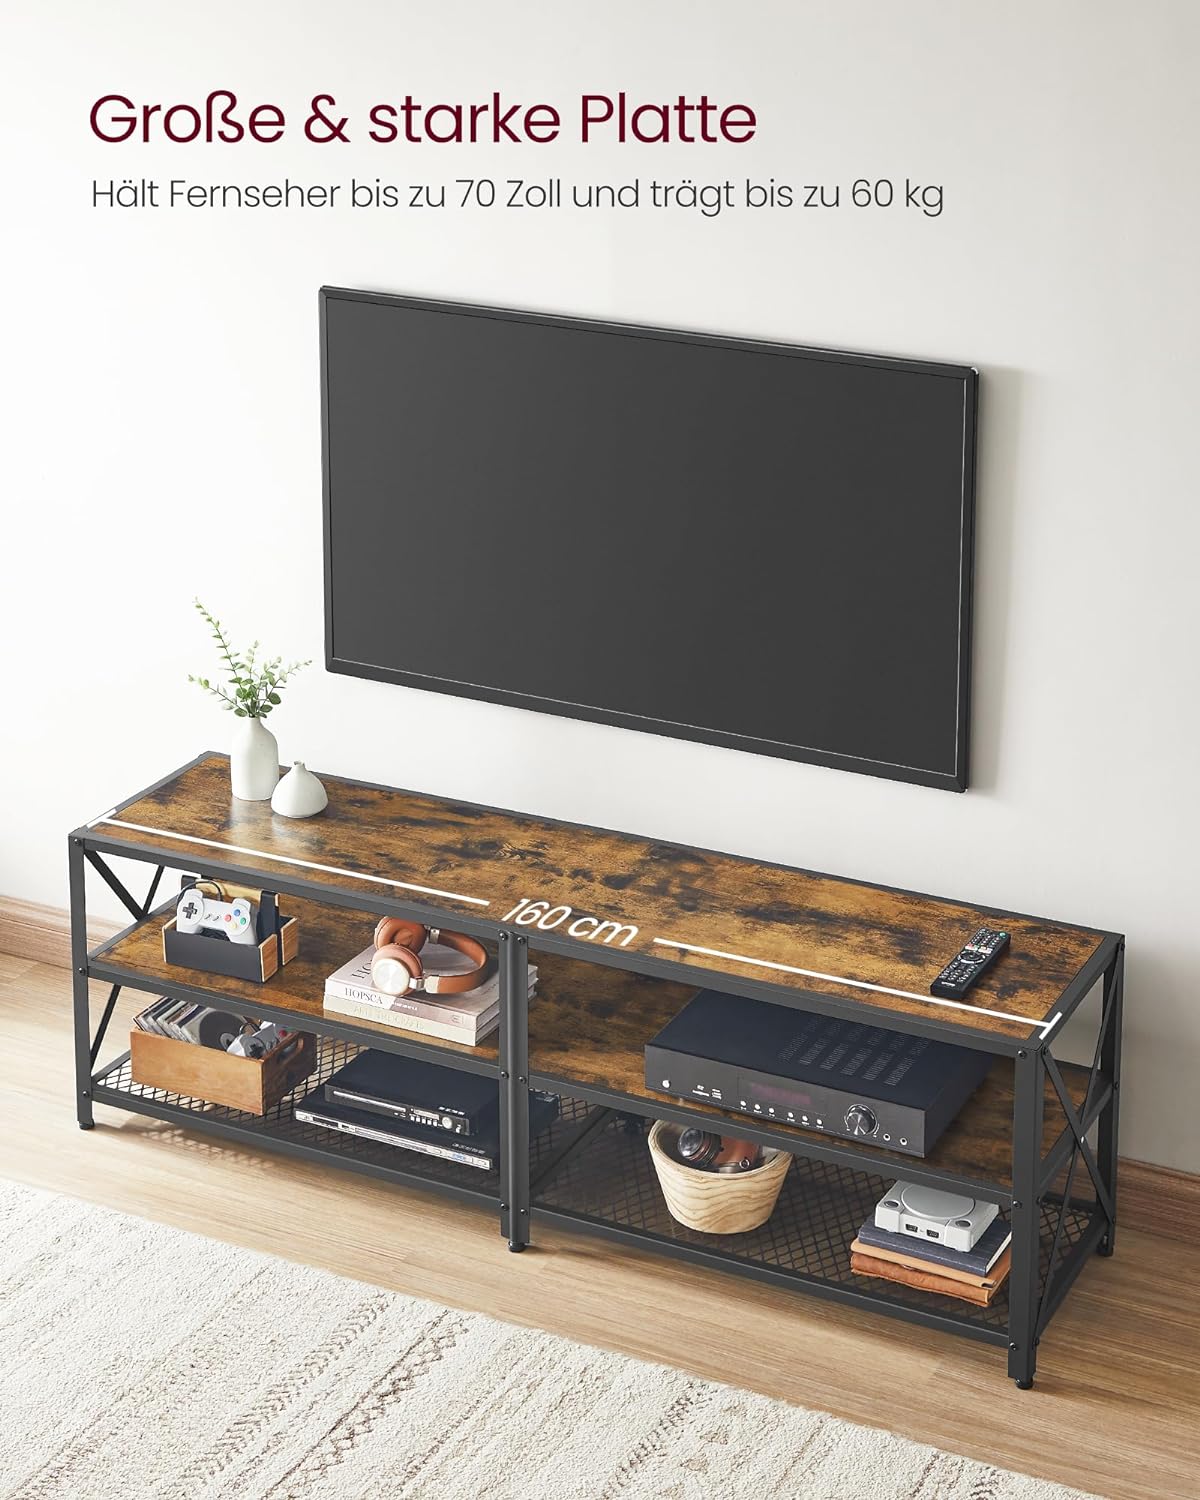 VASAGLE TV Cabinet Stand Lowboard for TVs up to 70 Inches with Shelves Steel Frame Vintage Brown/Black